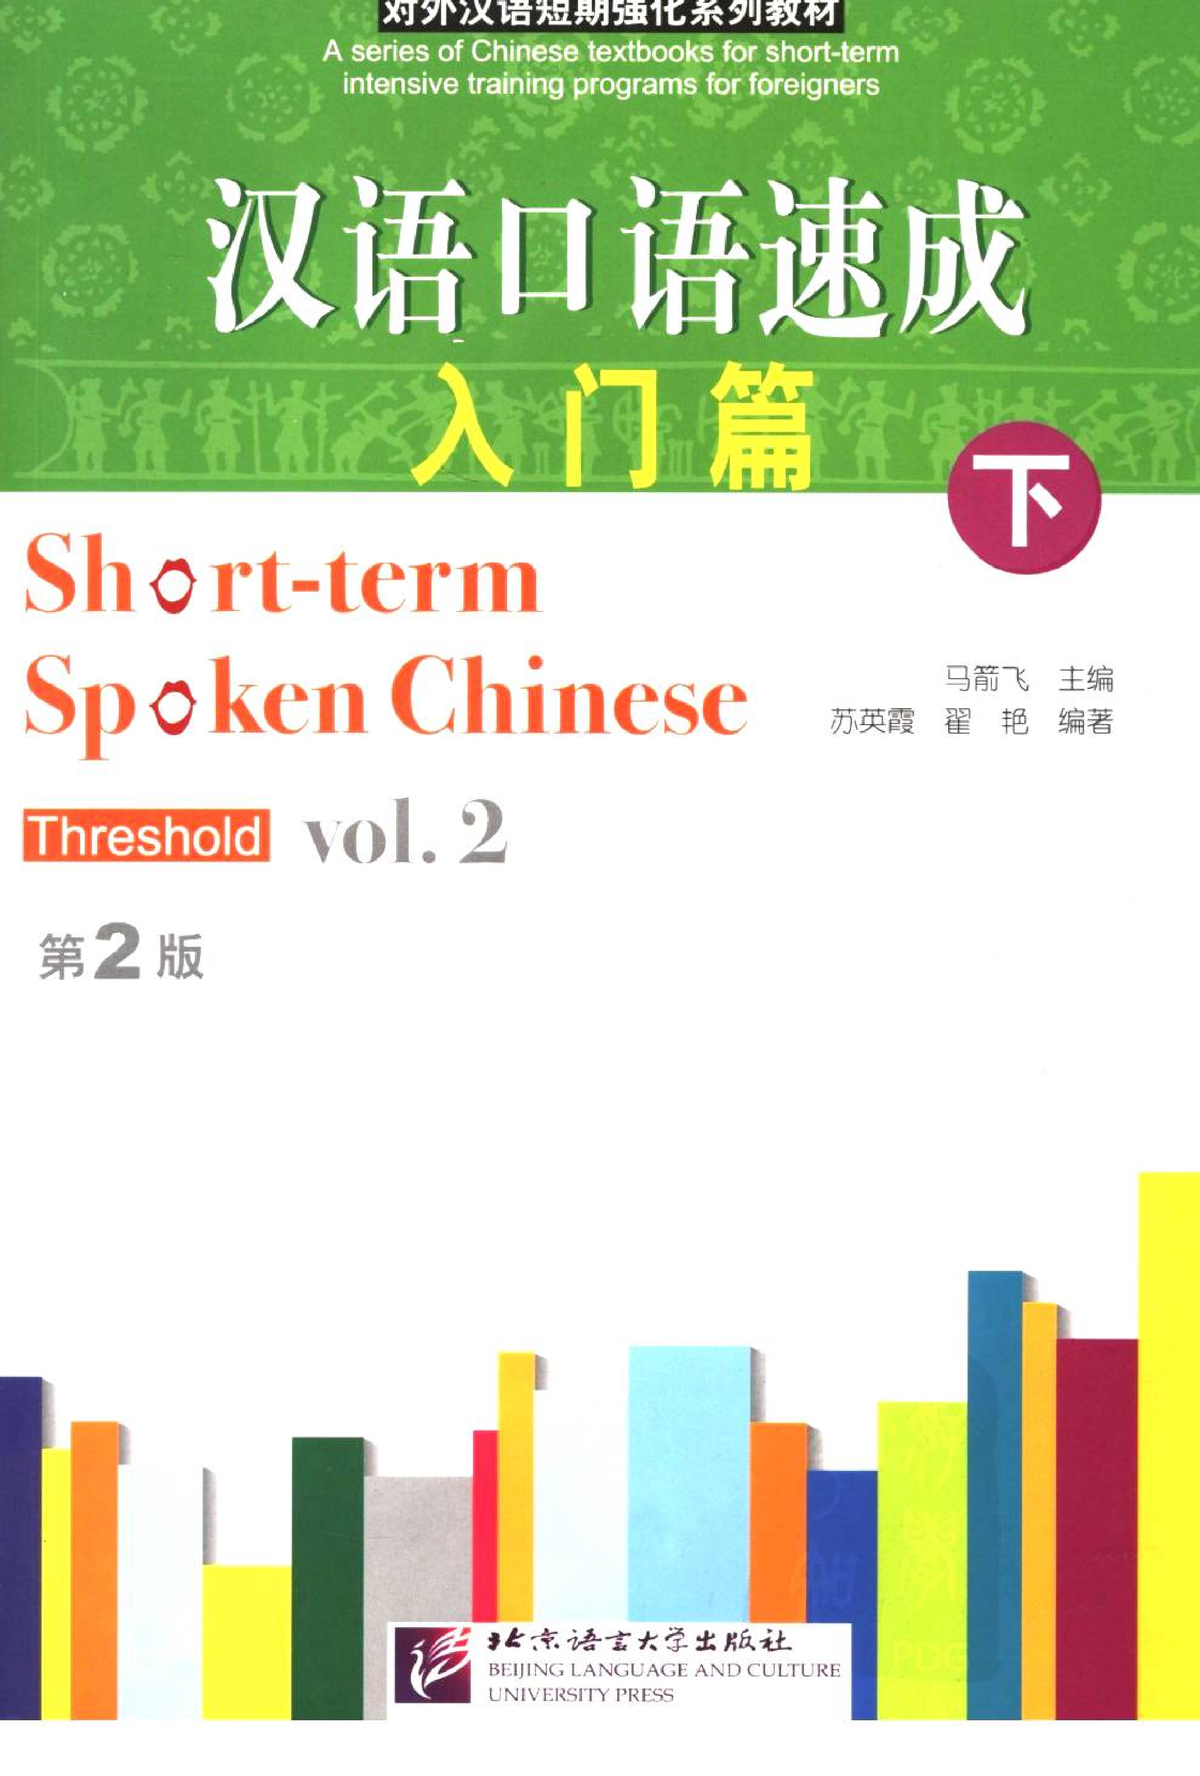 Short spoken Chinese. Short term spoken Chinese pdf. Short term spoken Chinese Intermediate. Chinese textbook.